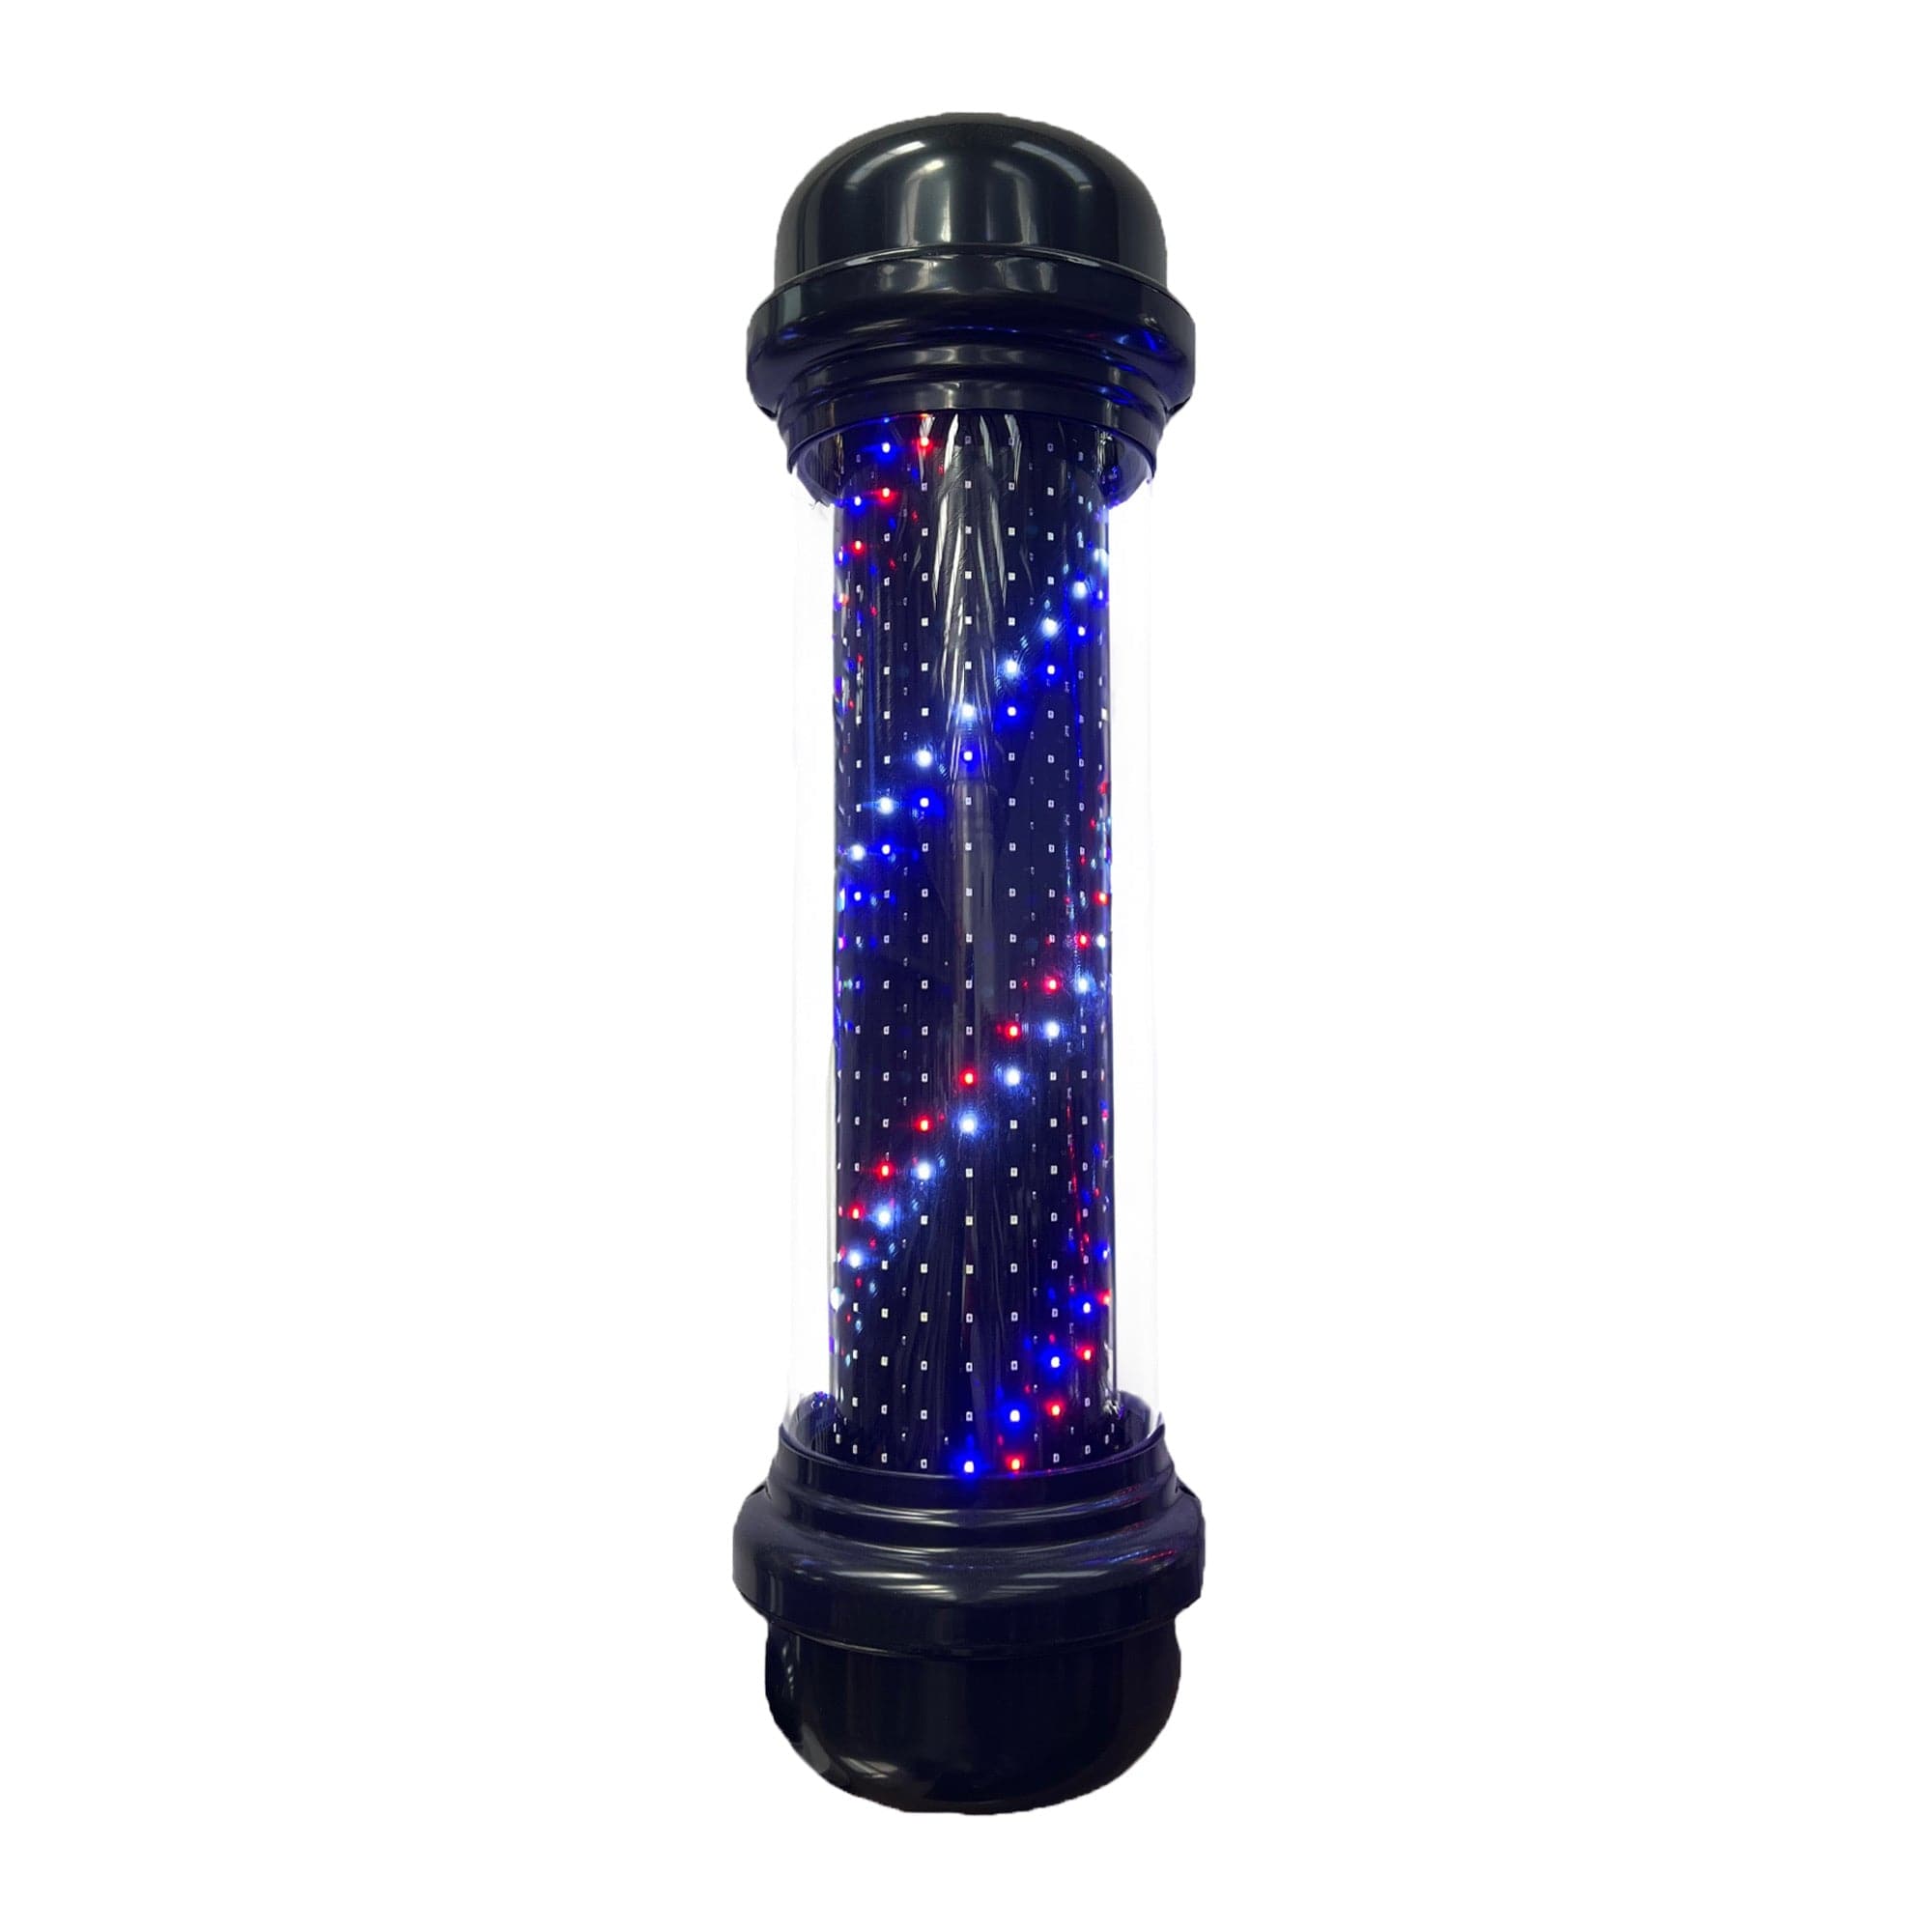 Gabri - Barber Pole Led Light 5 Modes With Remote Control (Black) 70cm